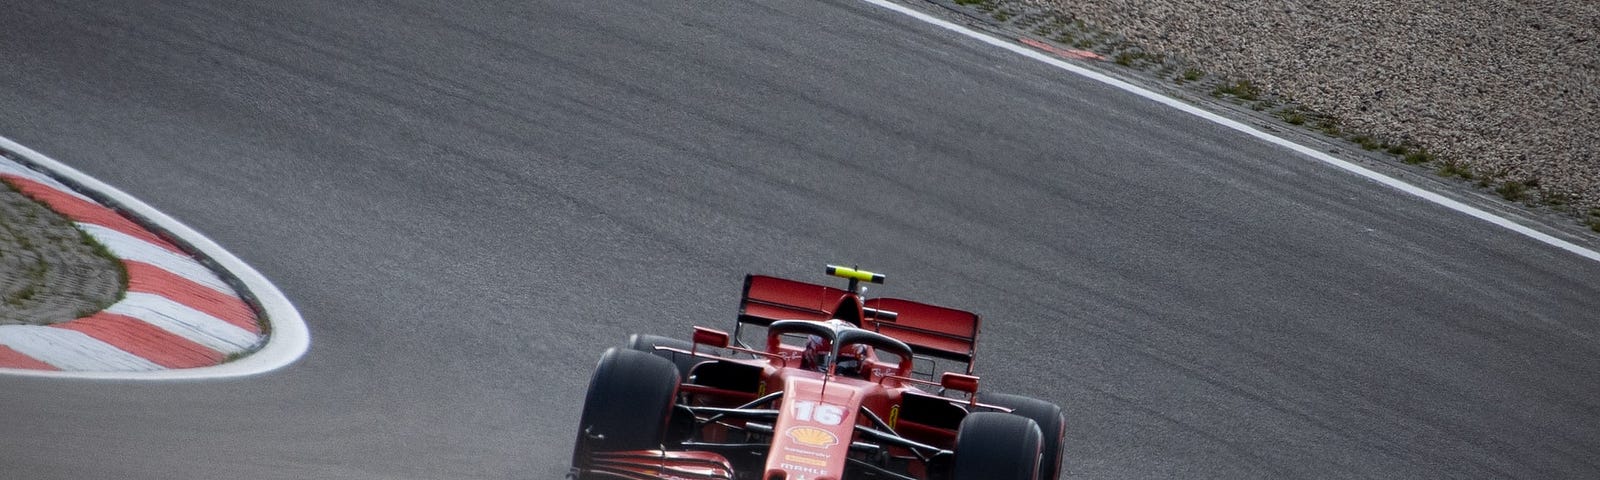 IMAGE: A Ferrari Formula 1 car negotiating a curve in a circuit